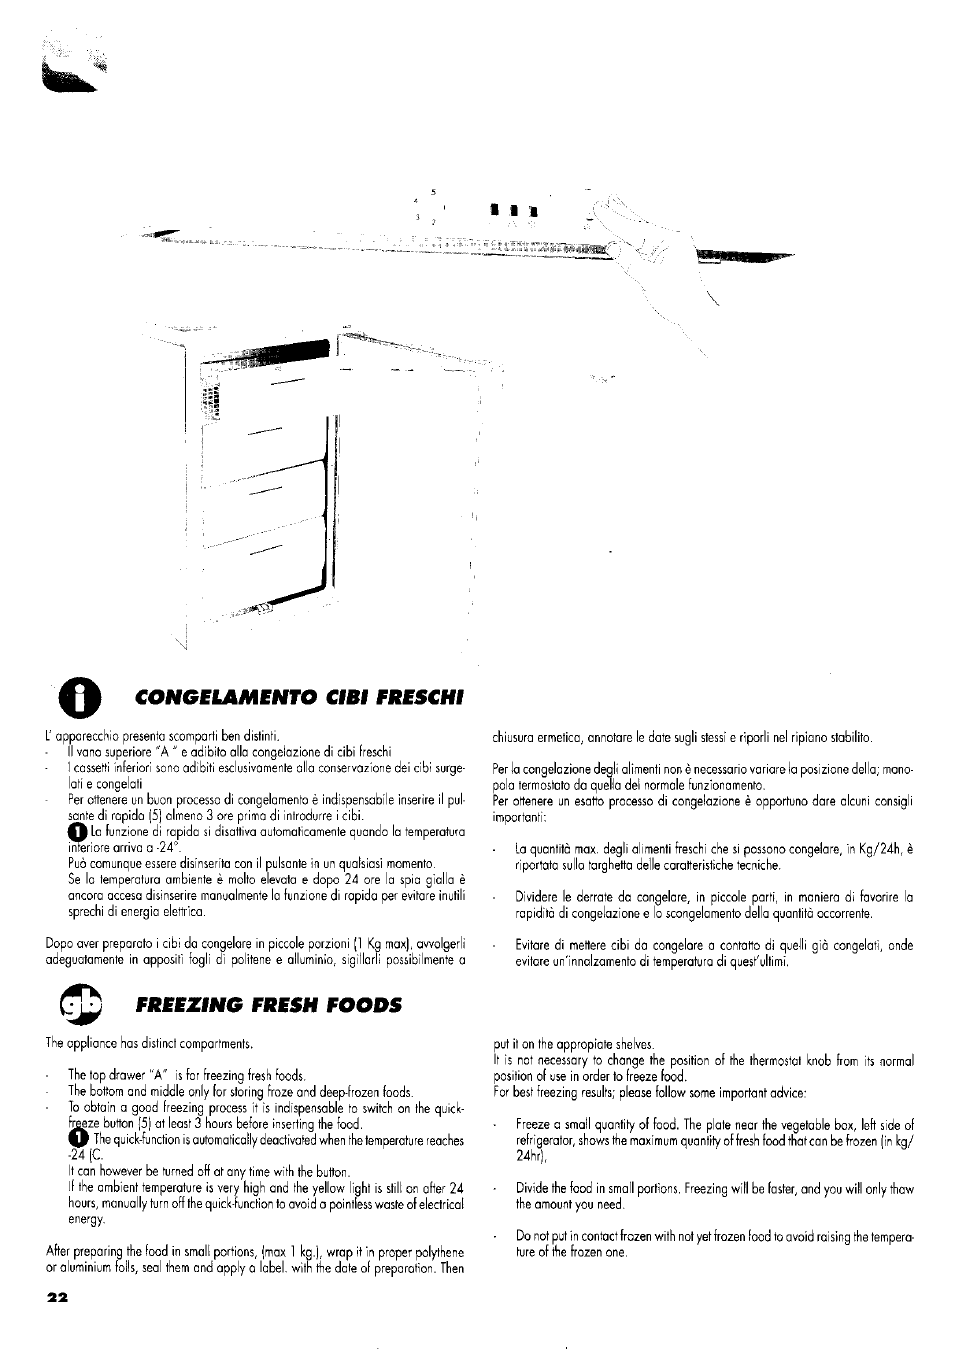 Congelamento cibi freschi | ZANKER GS 105 User Manual | Page 22 / 31